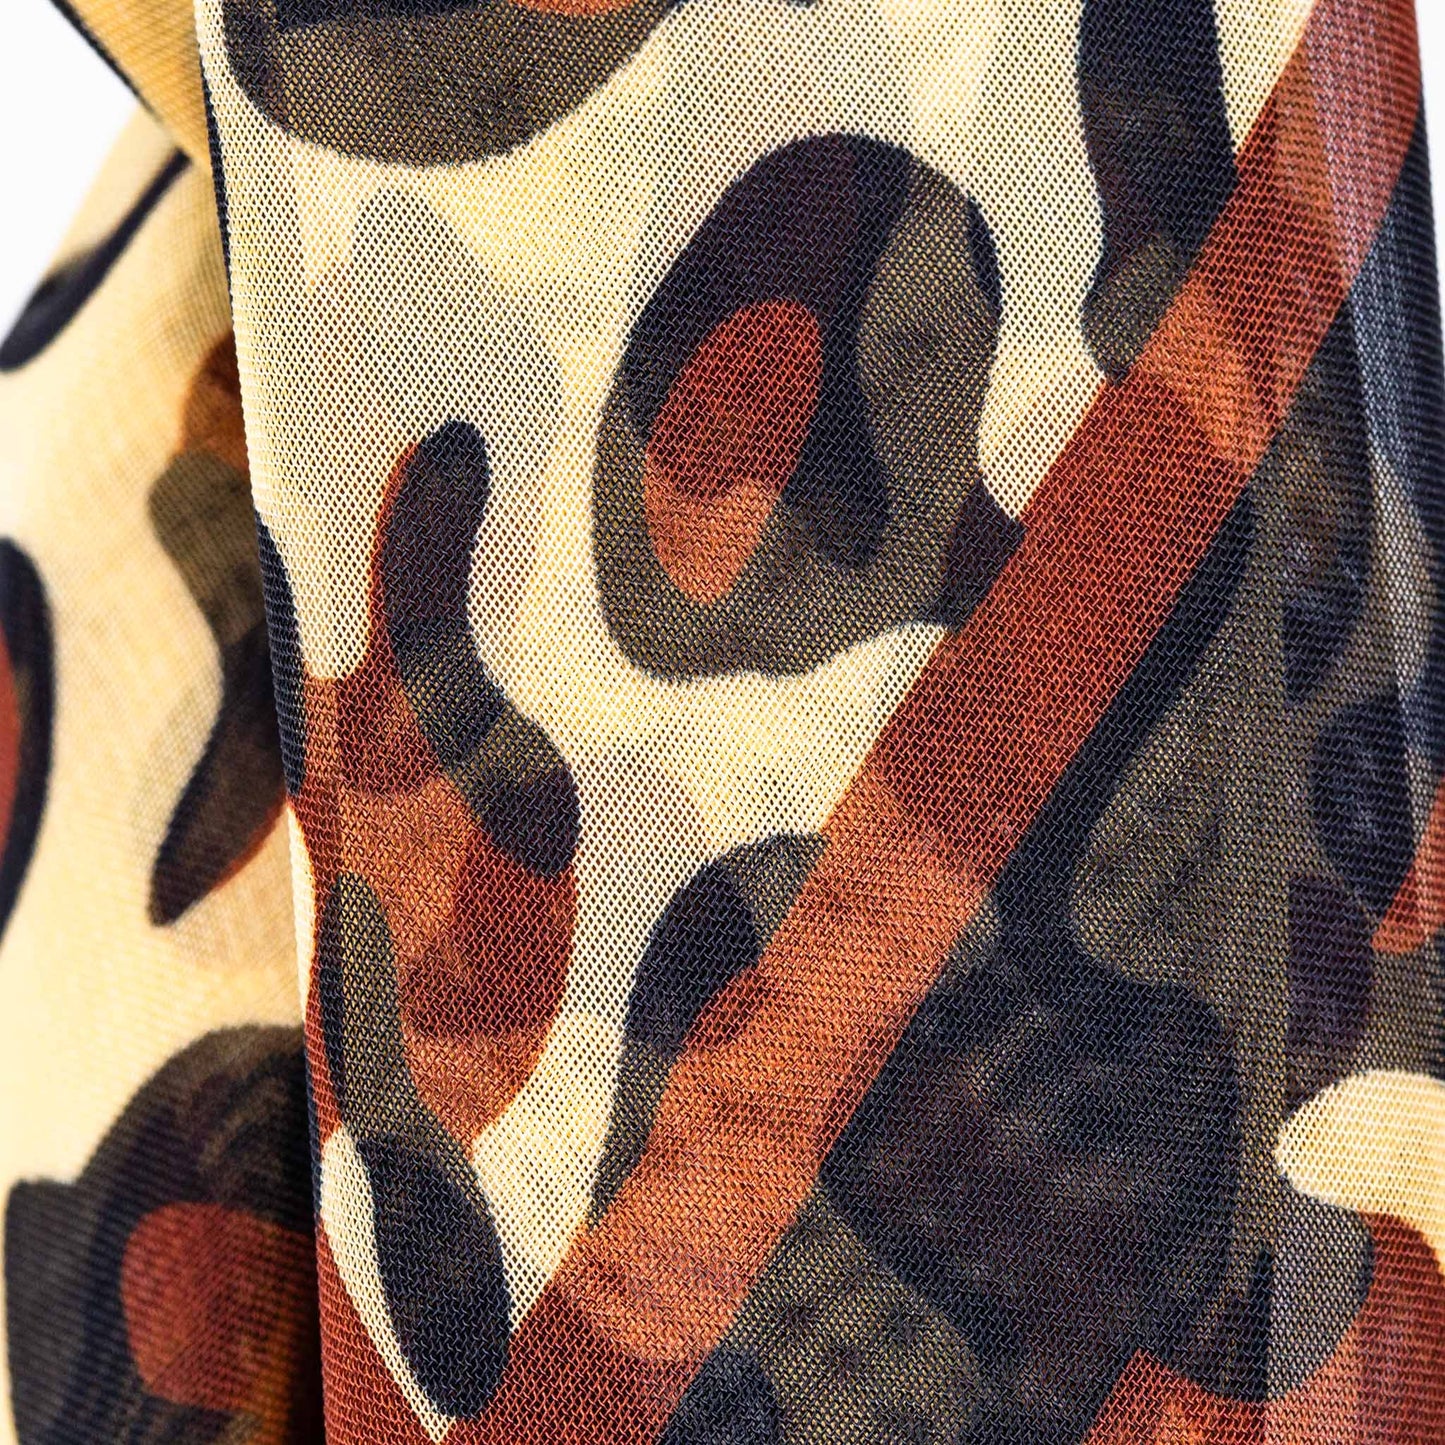 Eșarfă damă din mătase cu animal print și dungi, 65 x 65 cm - Maro